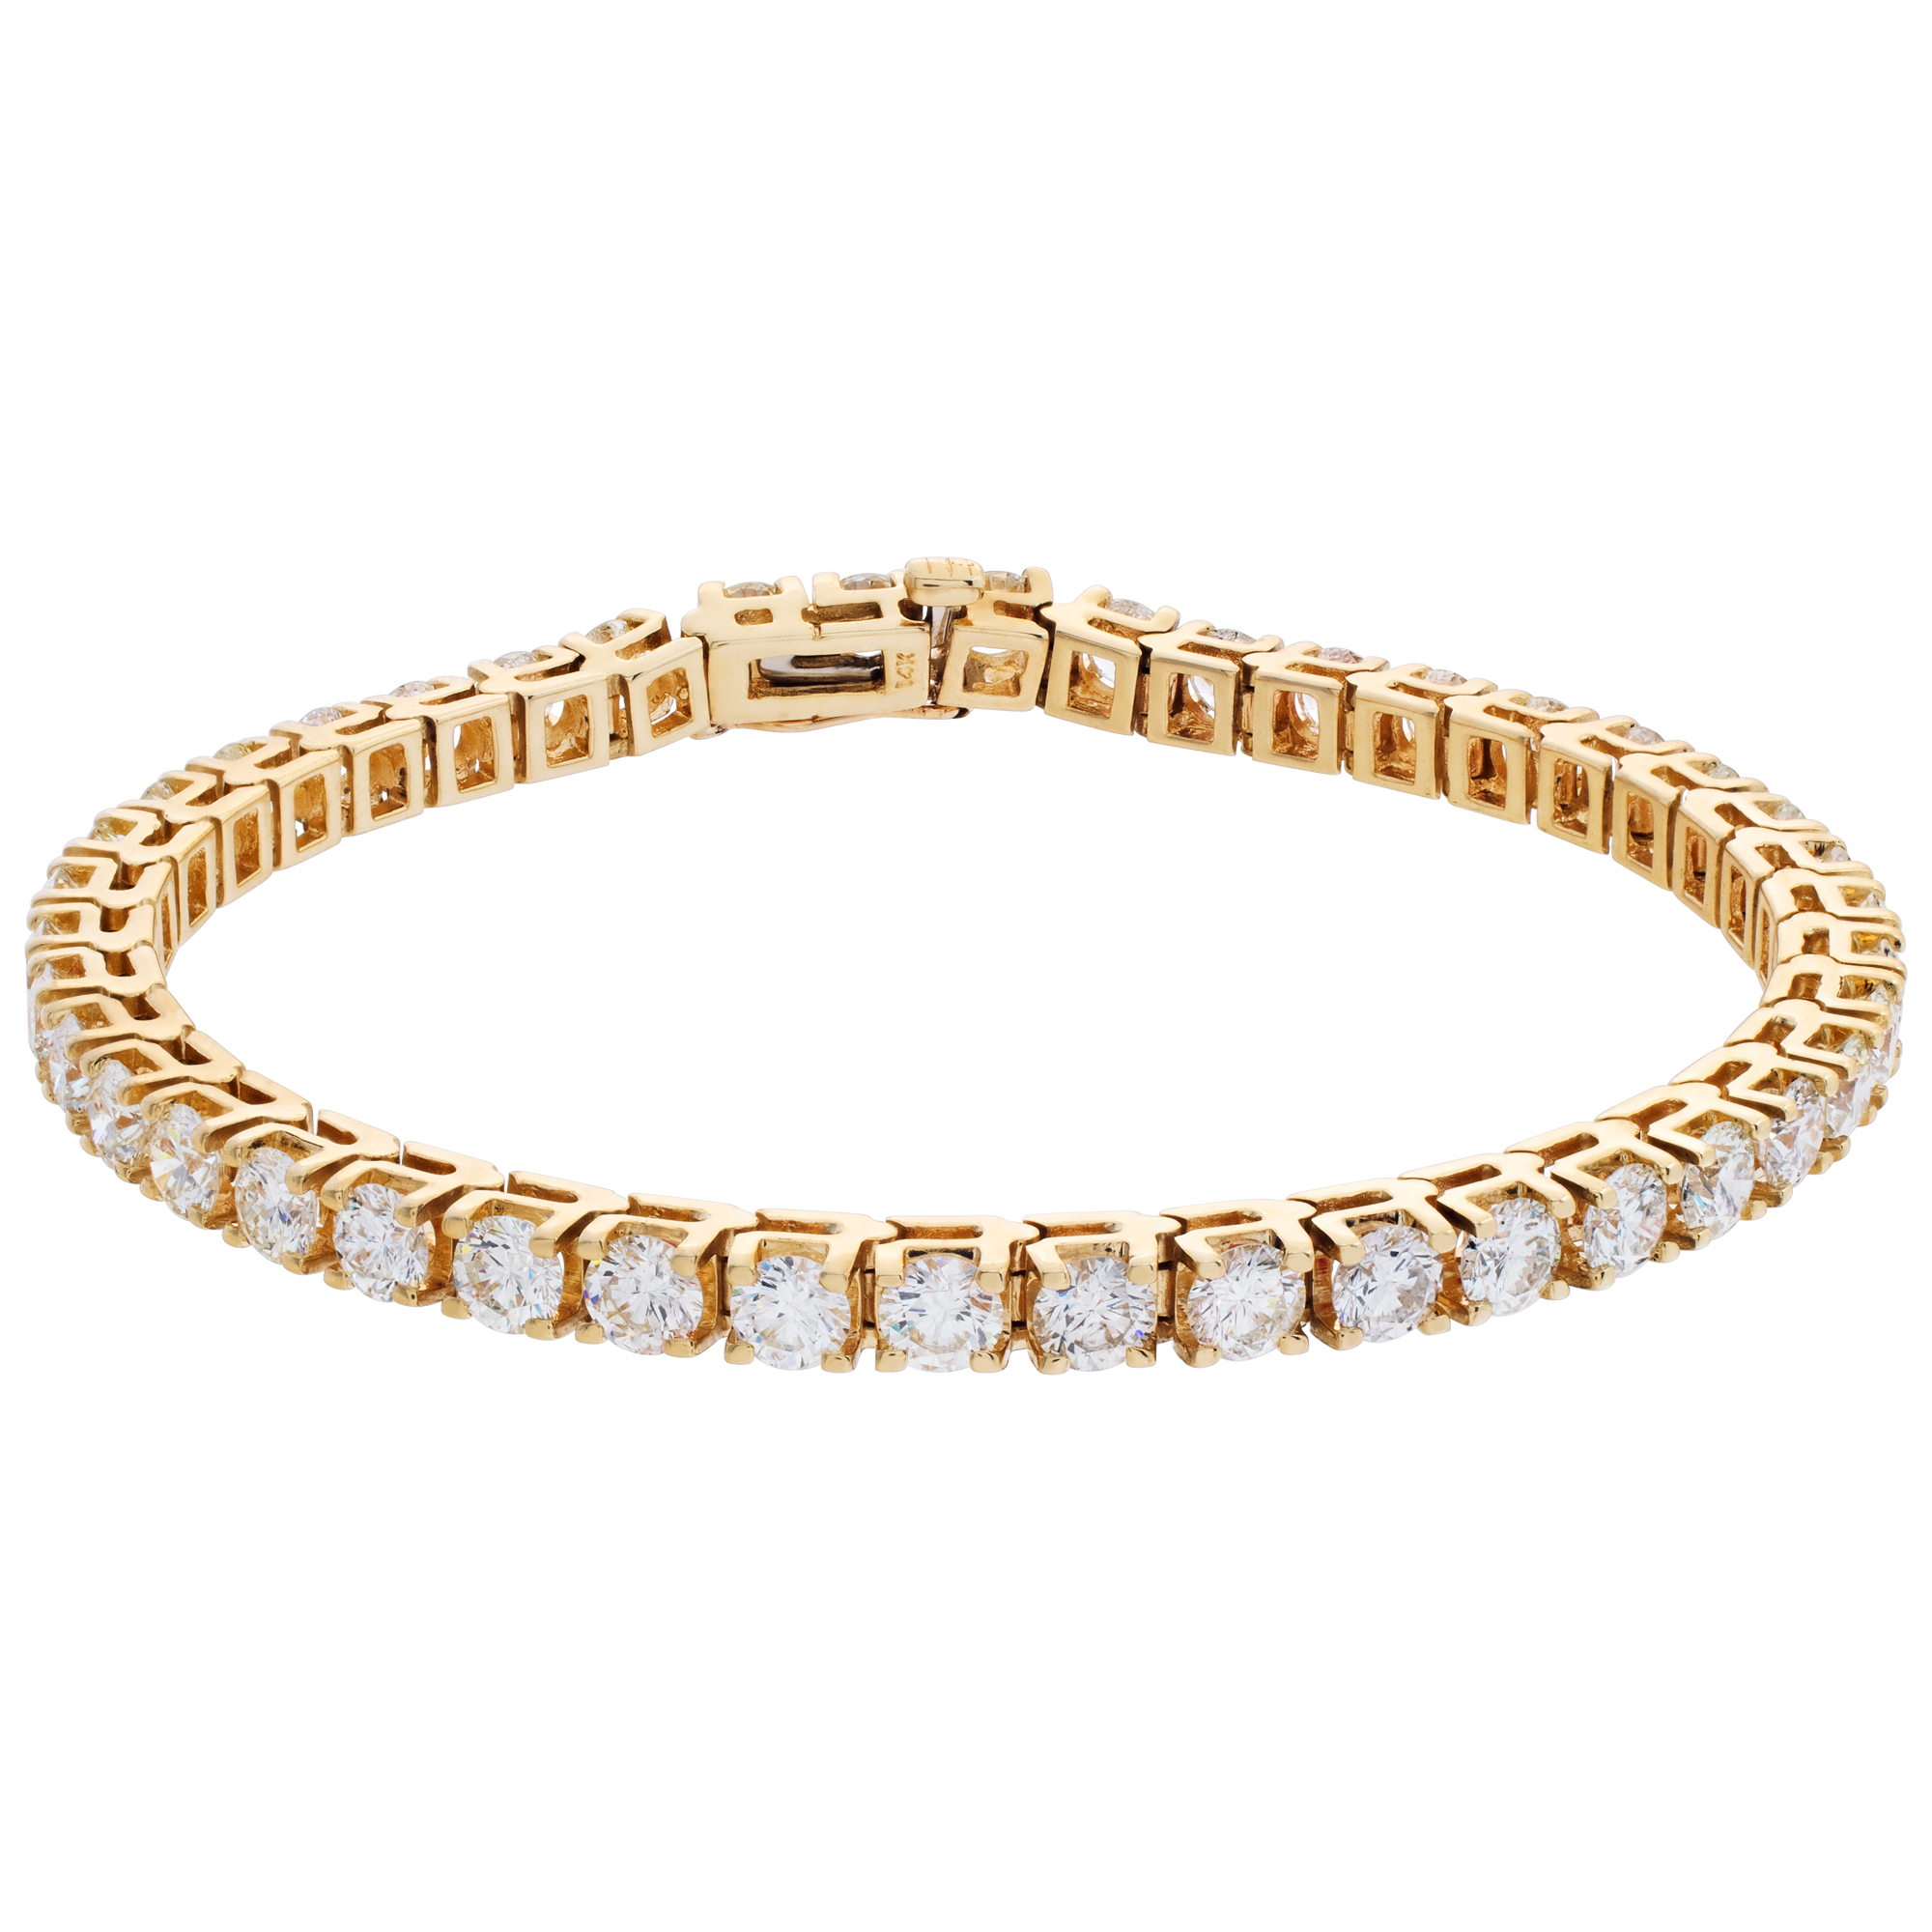 Diamonds line bracelet with approx 7.60 carats round brilliant cut diamonds, set in 14K yellow gold.